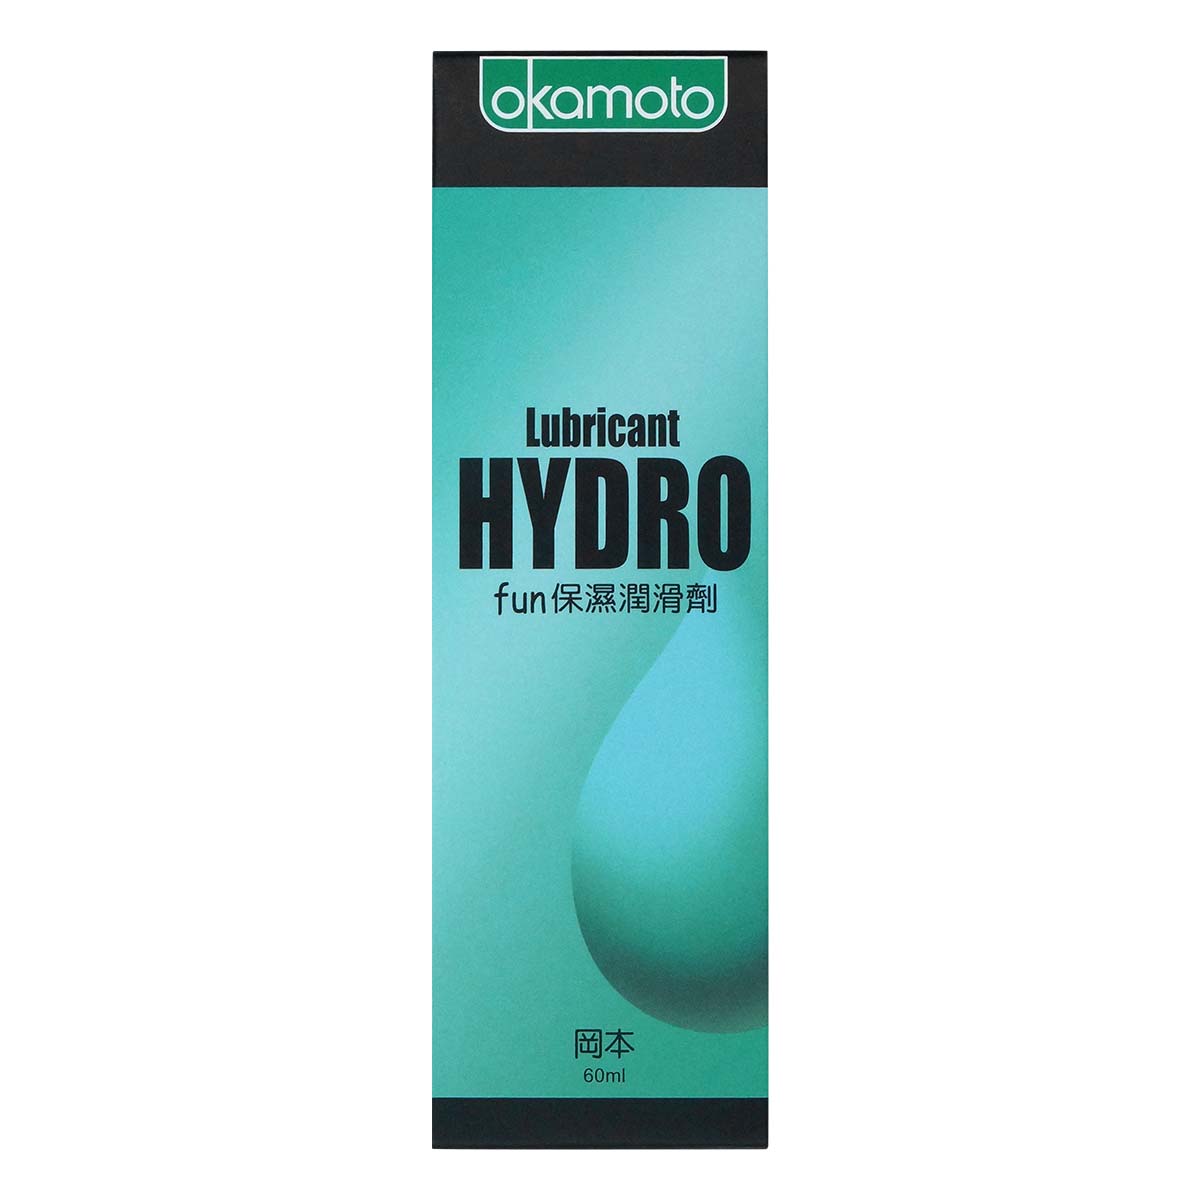 Okamoto Hydro 60ml Water-based Lubricant-p_2